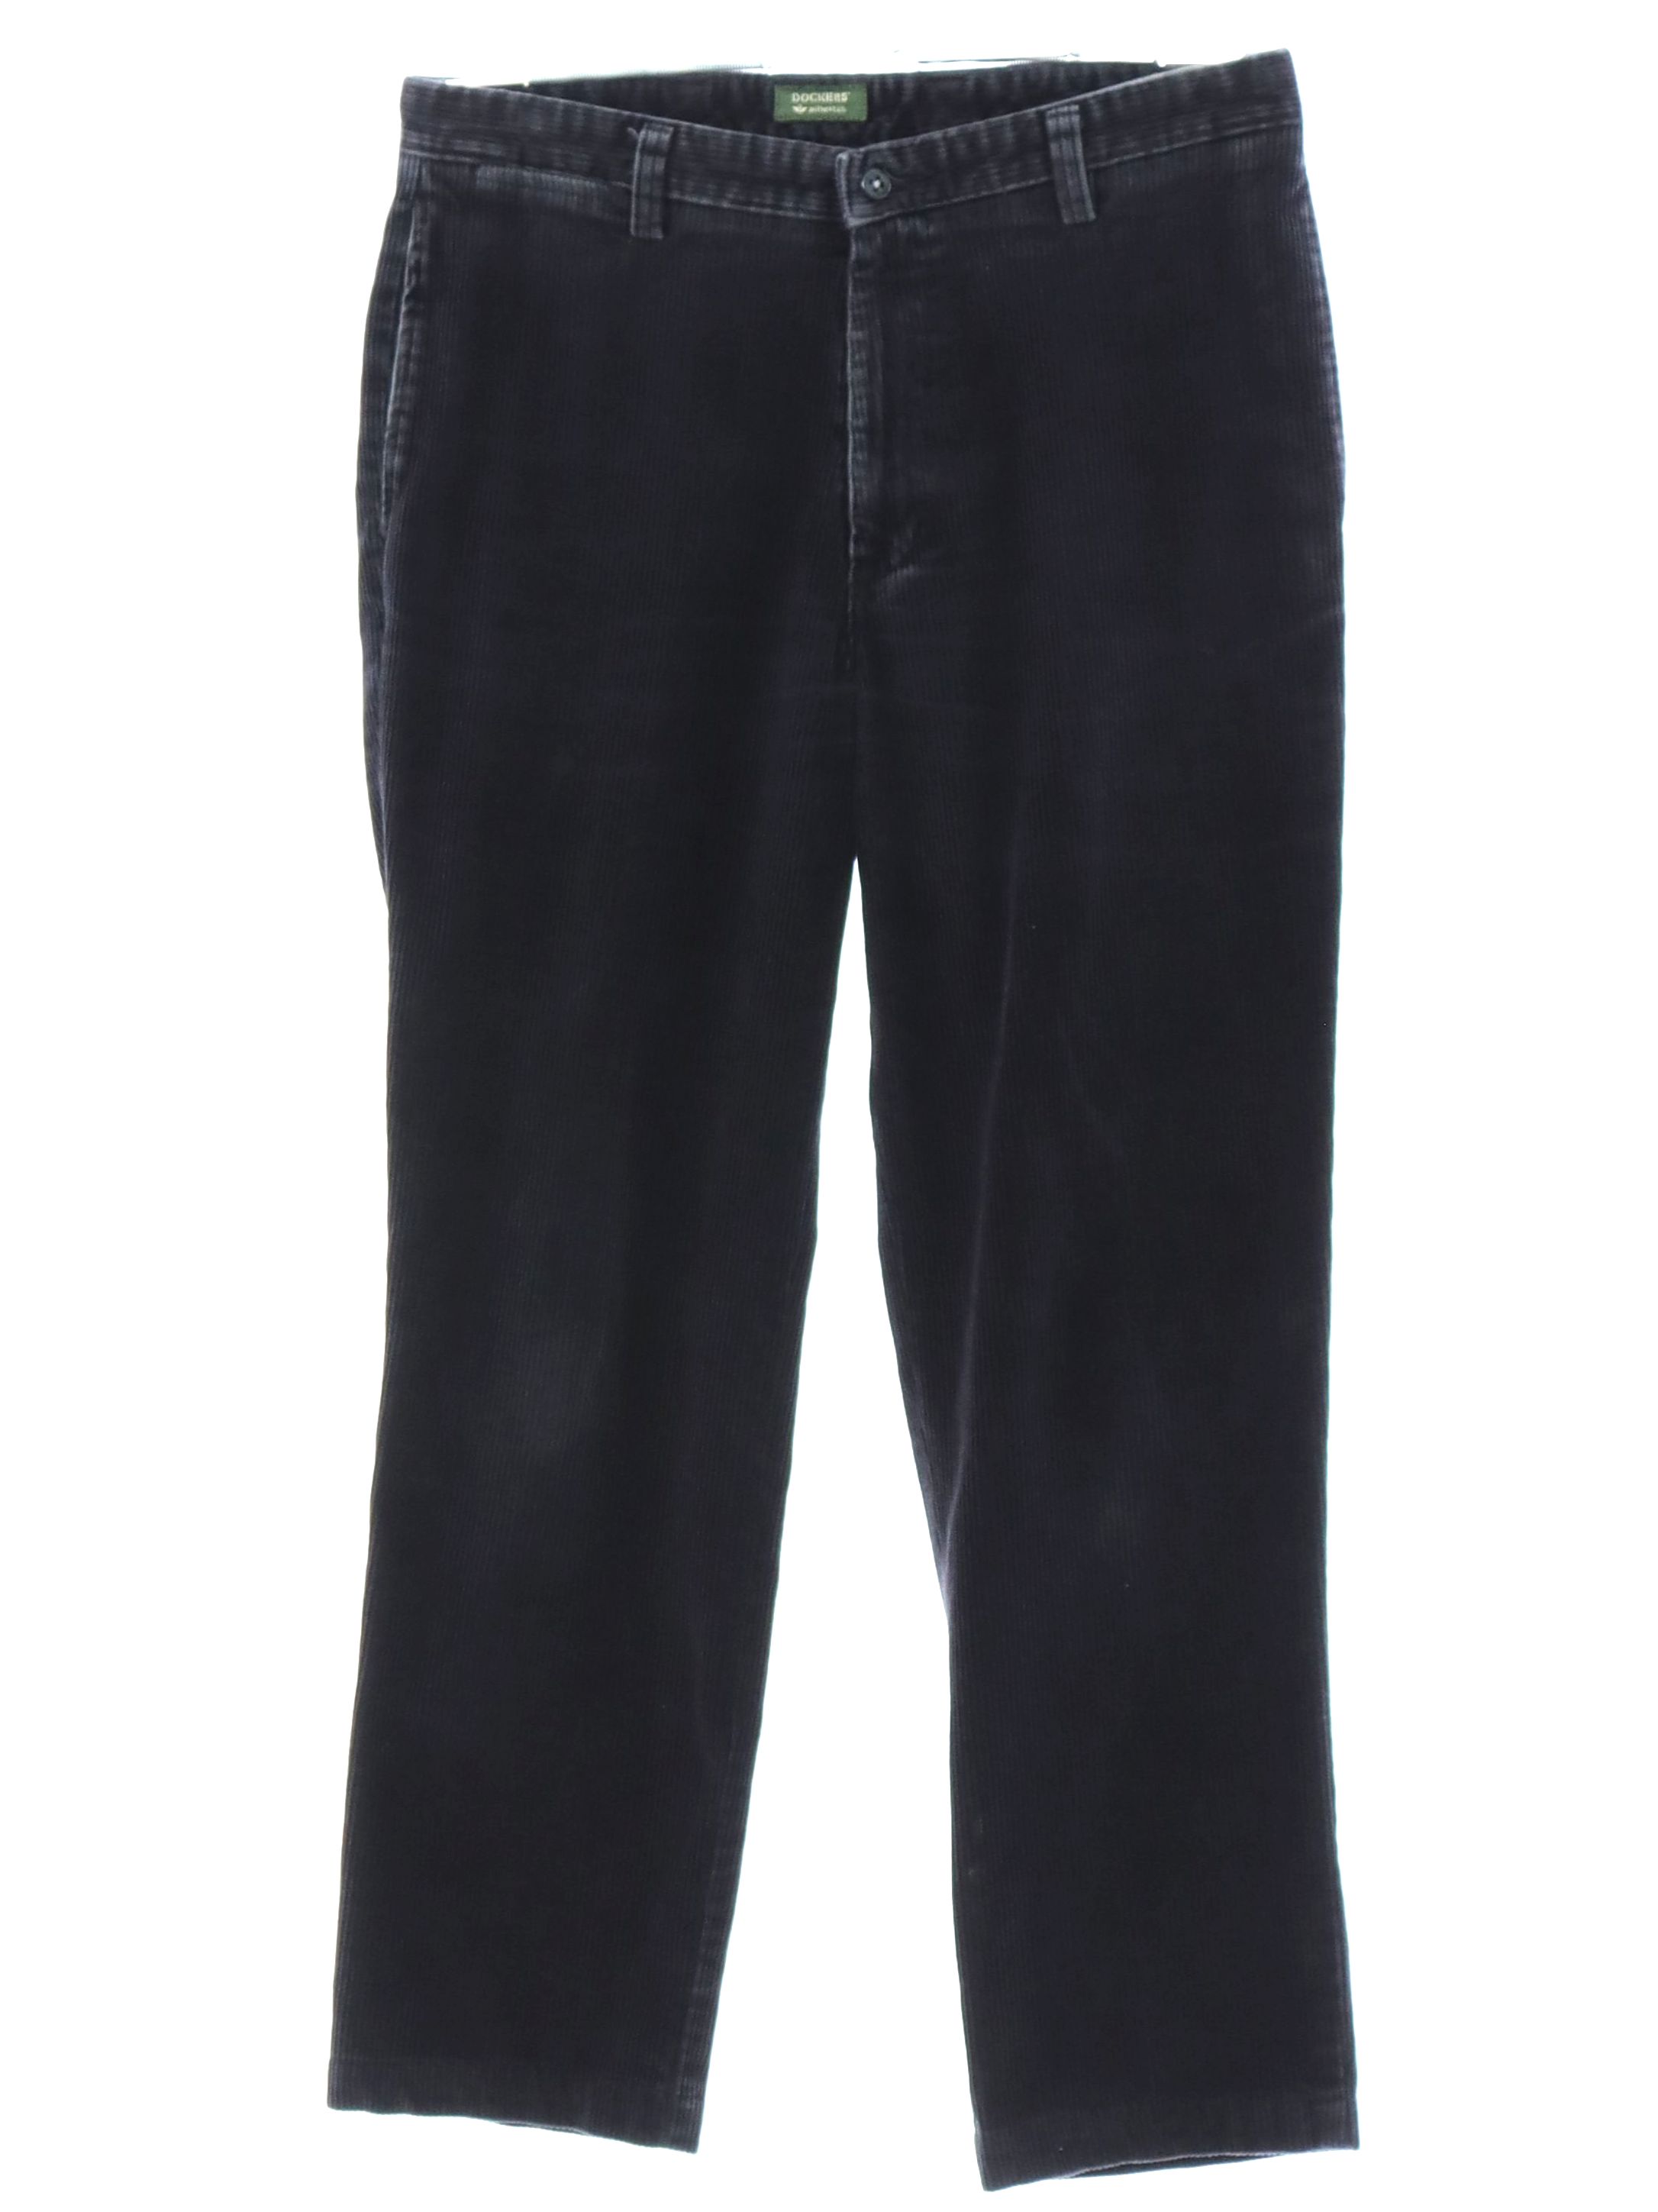 Pants: 90s -Dockers- Mens black solid colored cotton corduroy flat ...